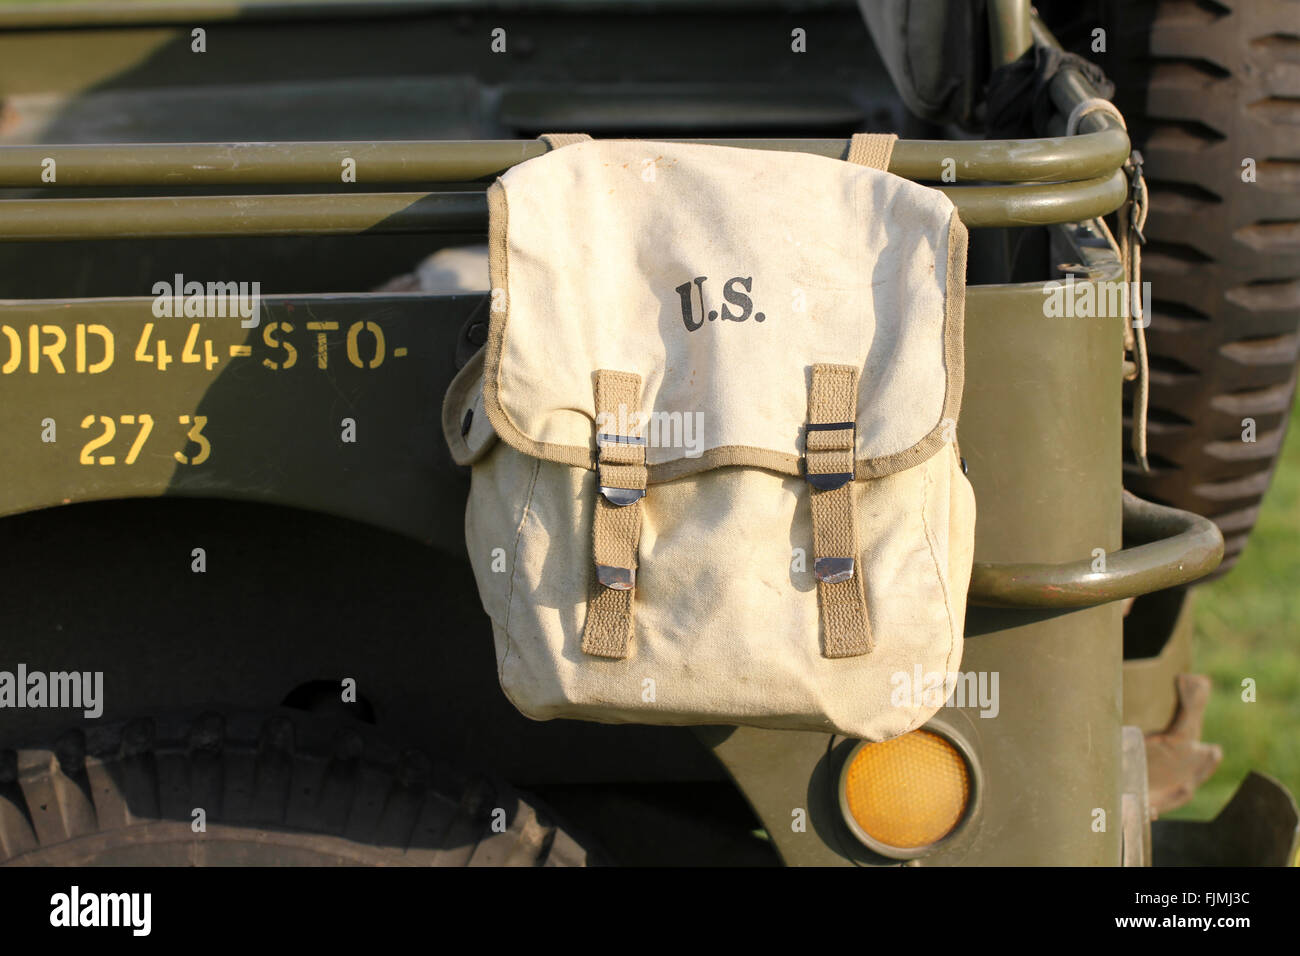 Army green bag -Fotos und -Bildmaterial in hoher Auflösung – Alamy